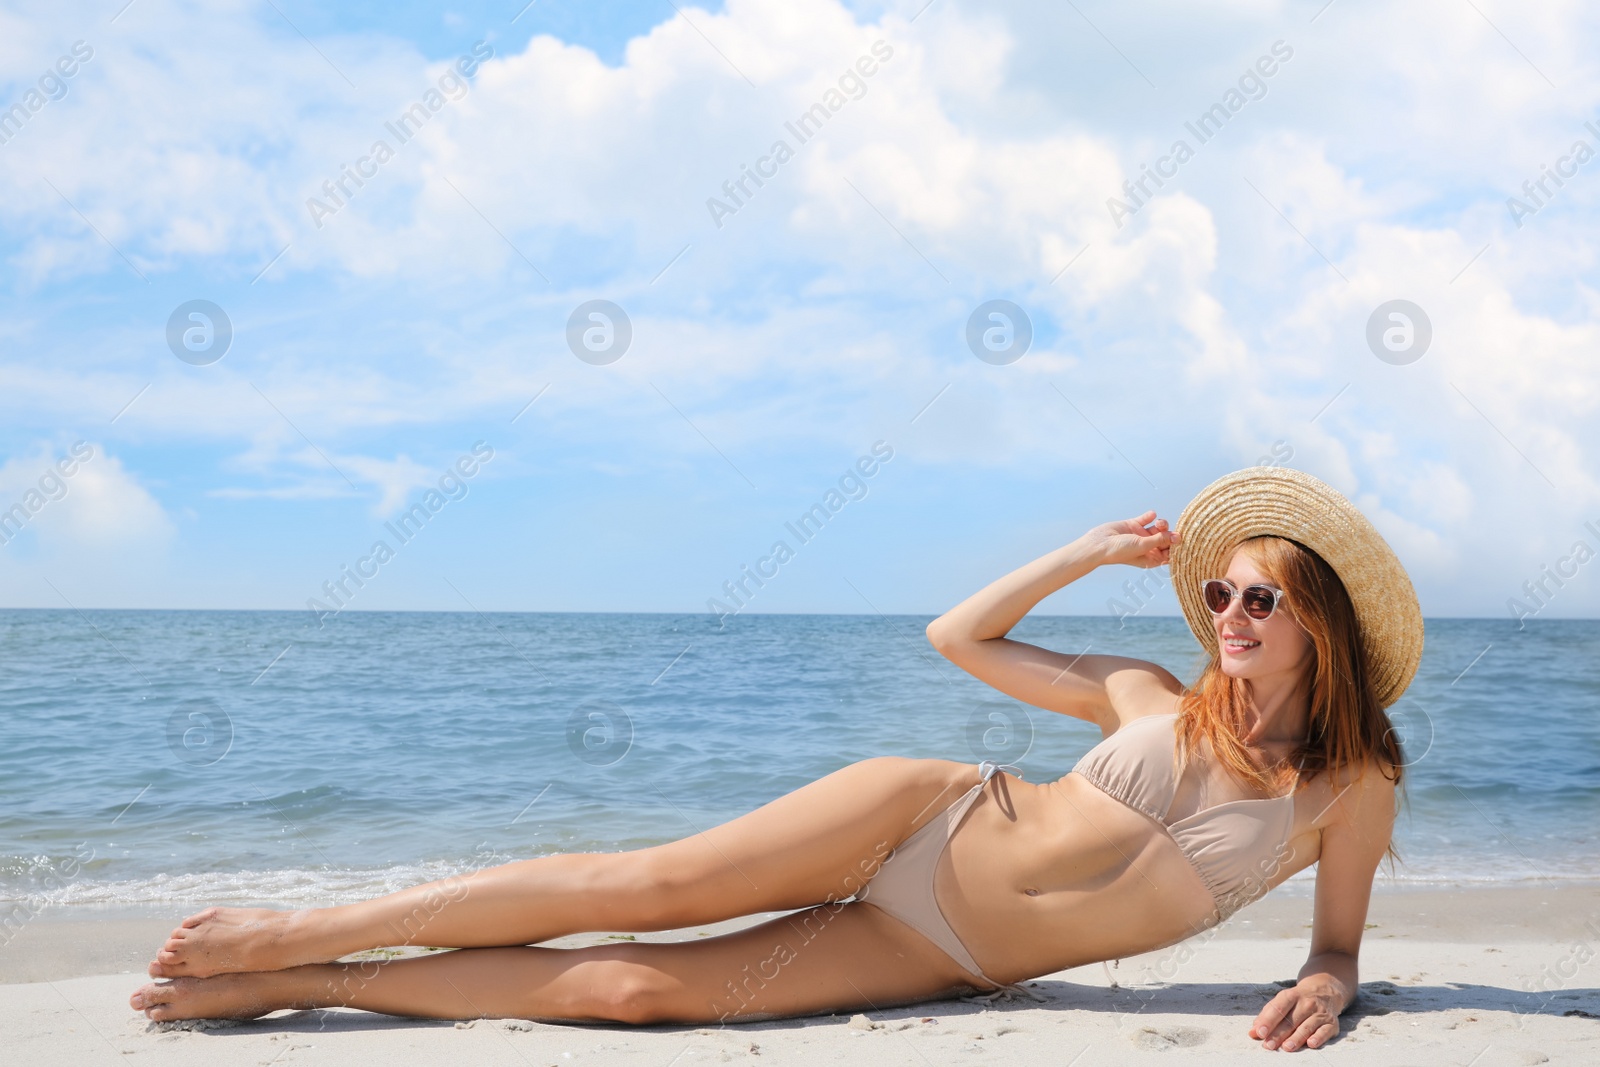 Photo of Attractive woman with perfect body in bikini lying on sandy beach near sea